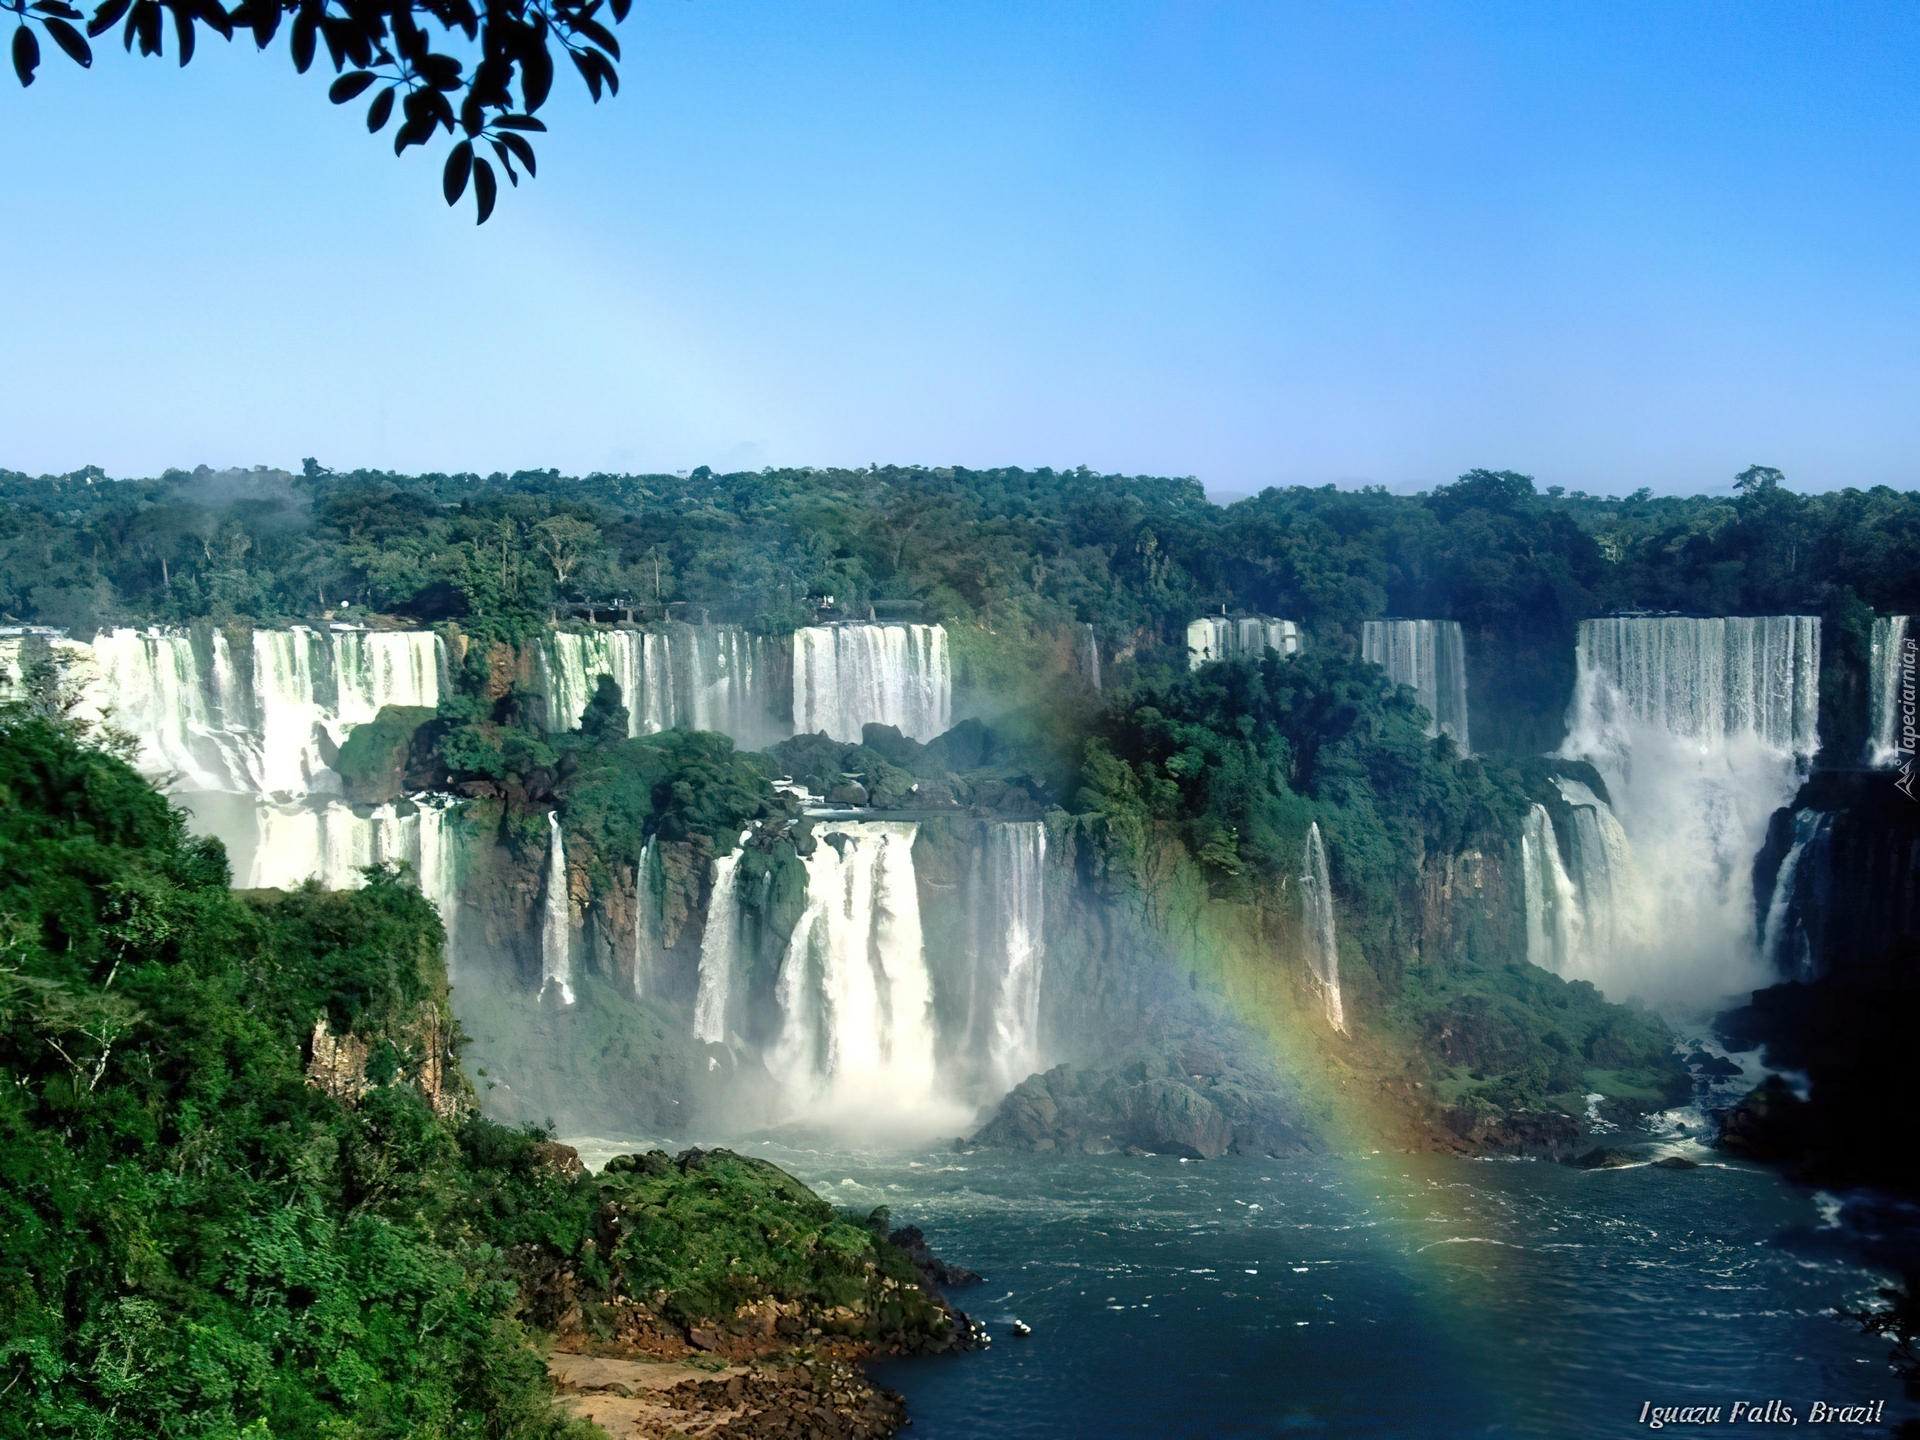 Широкий водопад в южной америке. Бразилия водопады Игуасу. Игуасу, Аргентина / Игуасу, Бразилия. Водопад Игуасу в Южной Америке.